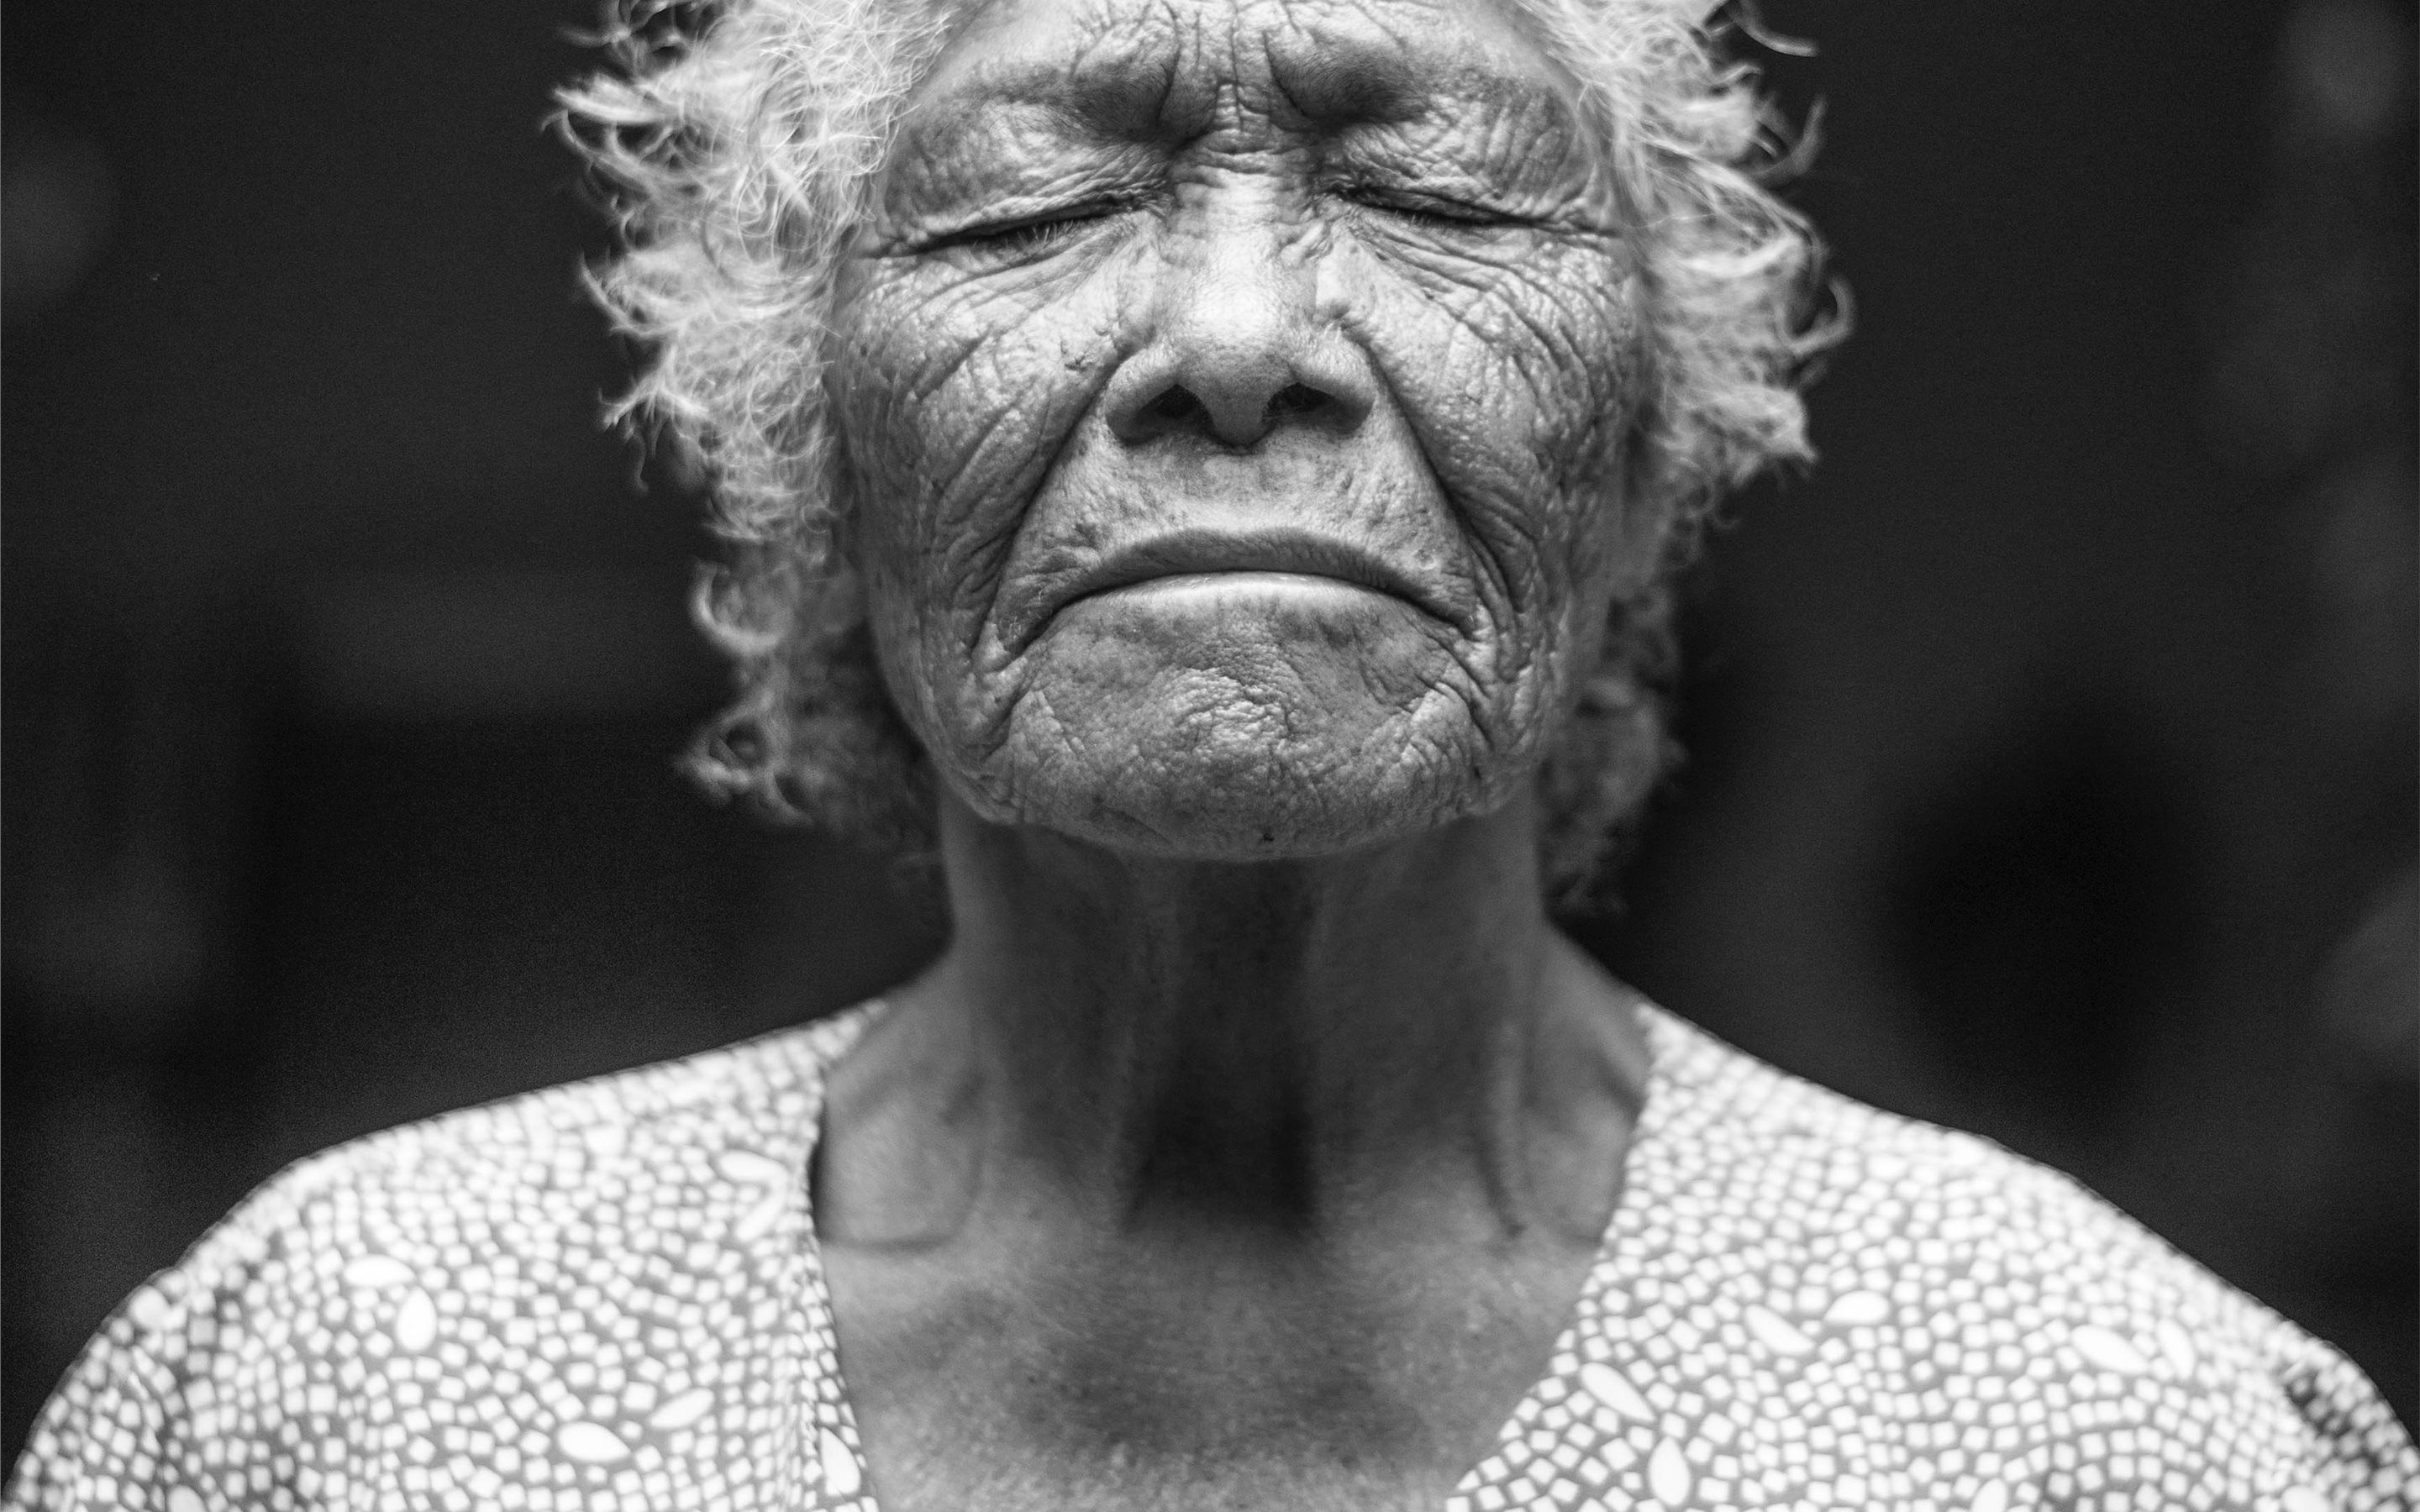 Old woman closing her eye. MacBook Air Wallpaper Download